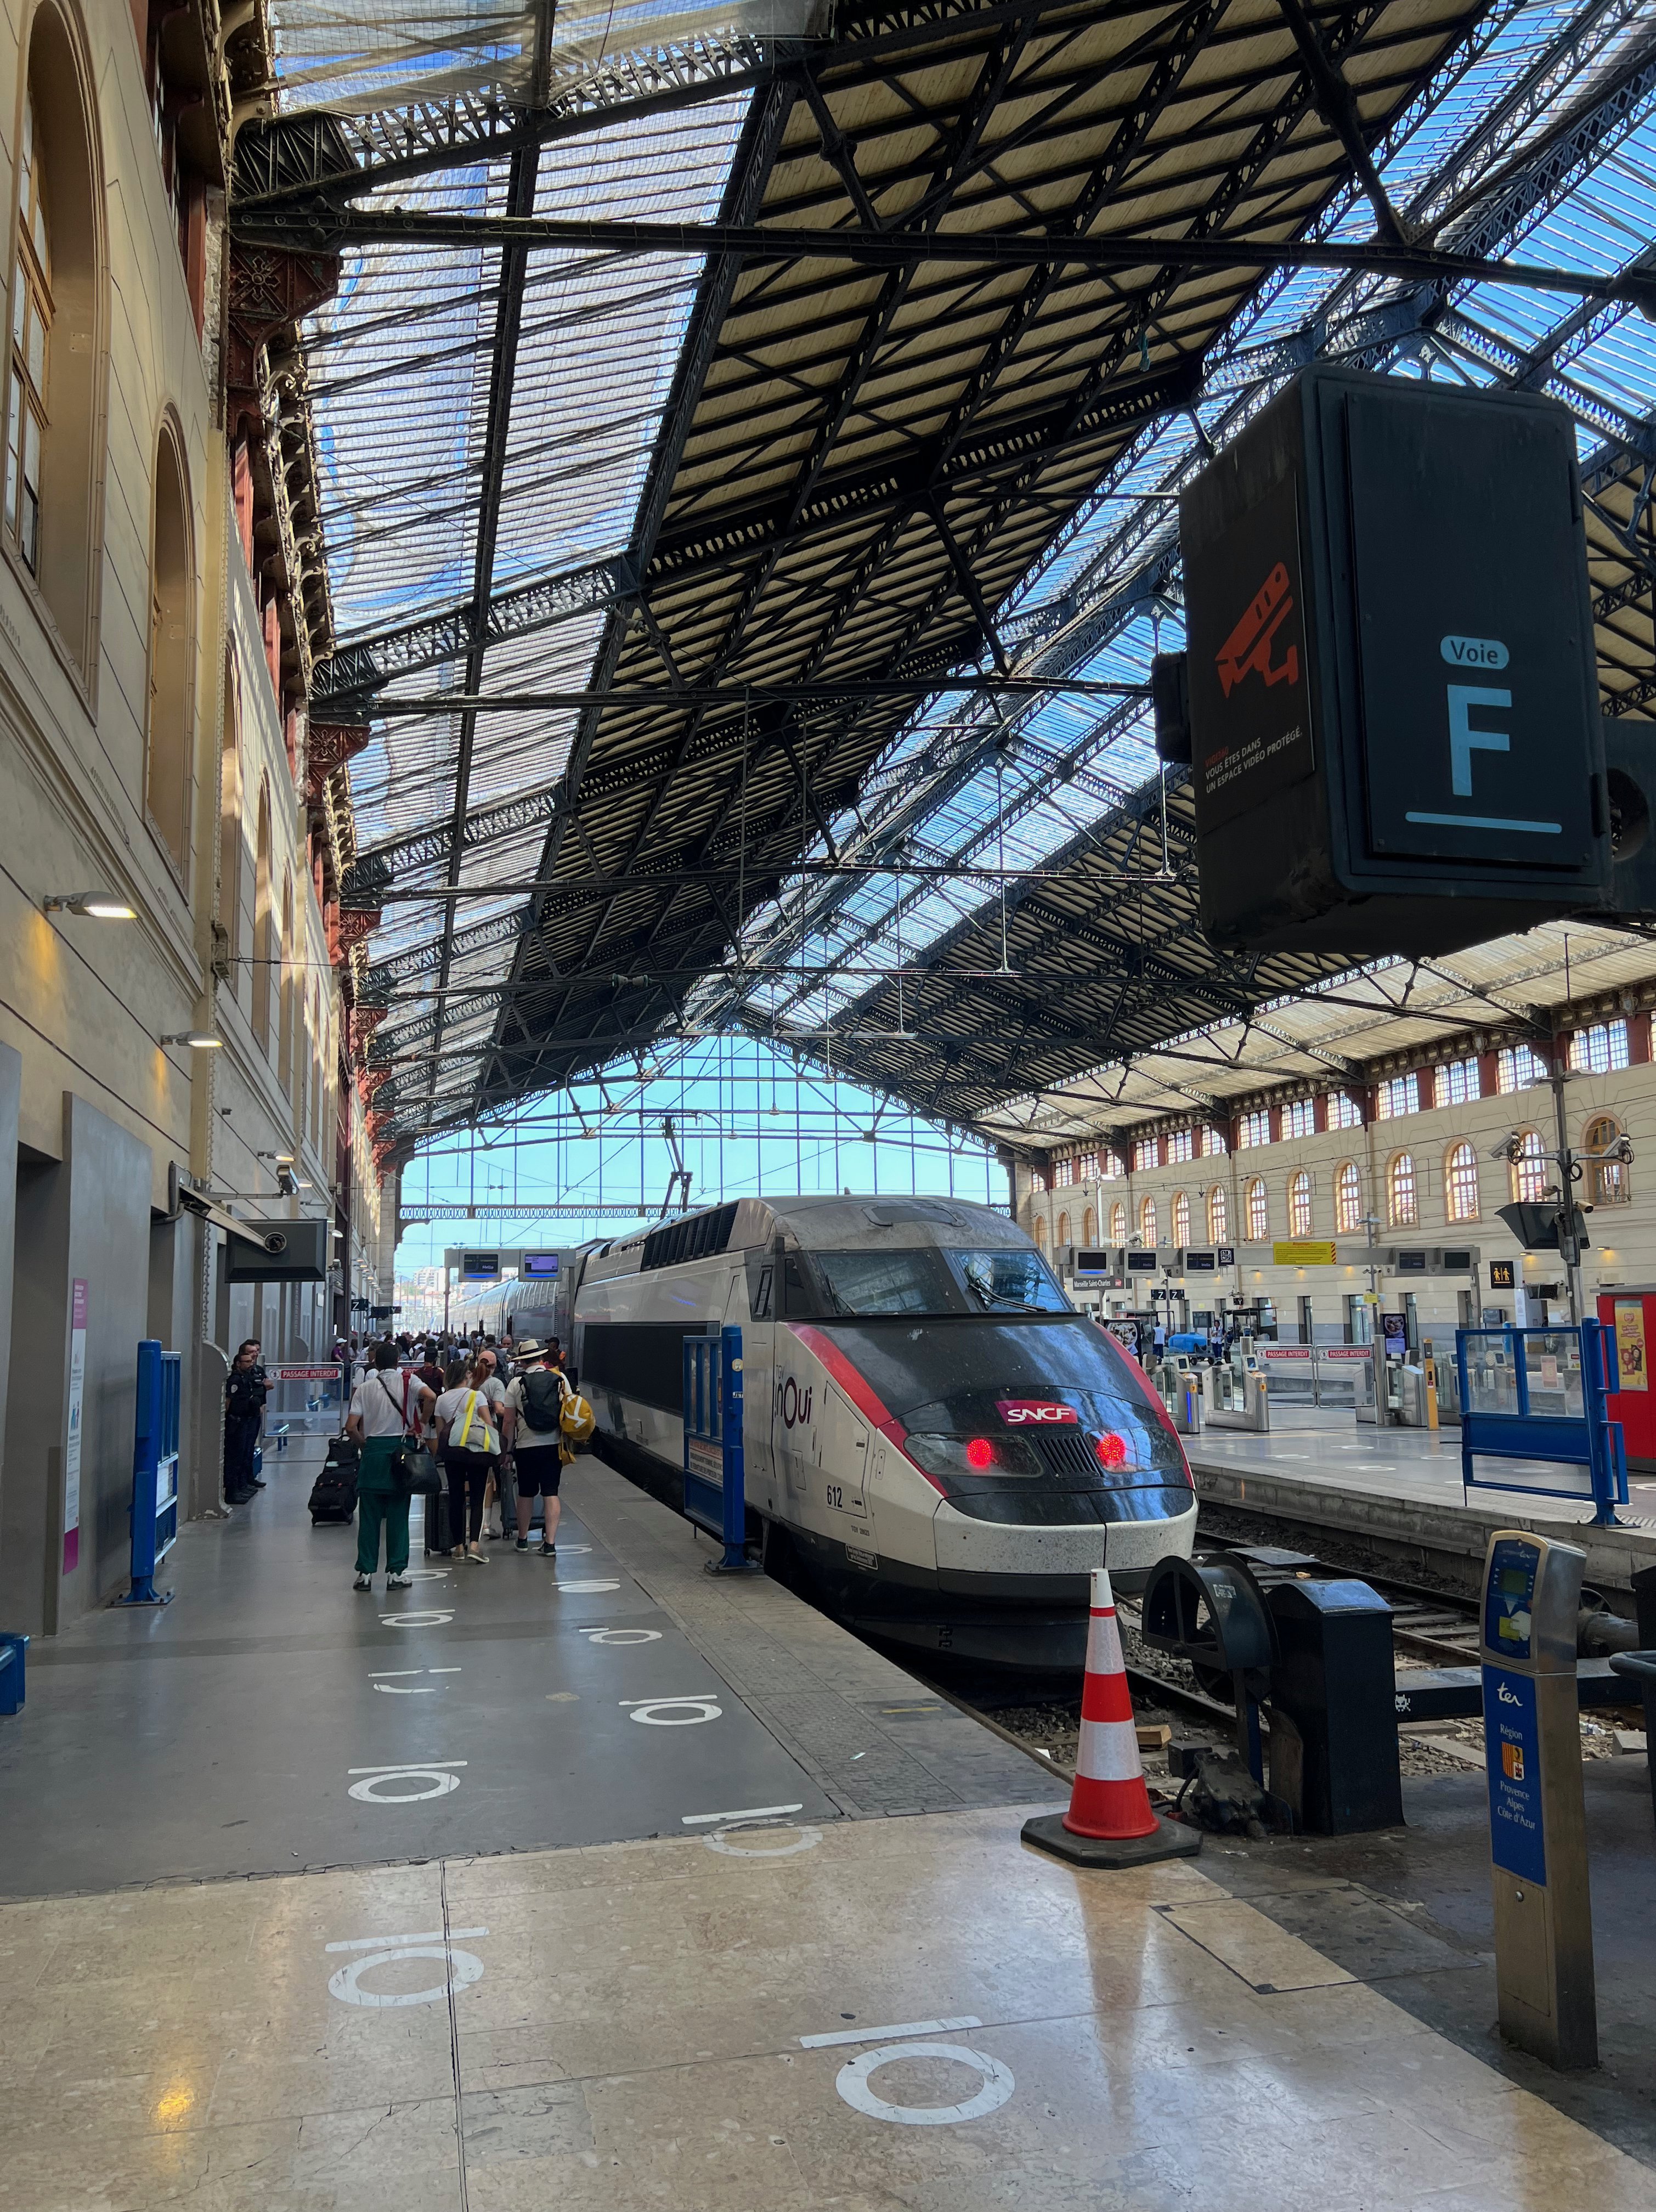 Our train at Gare de Lyon